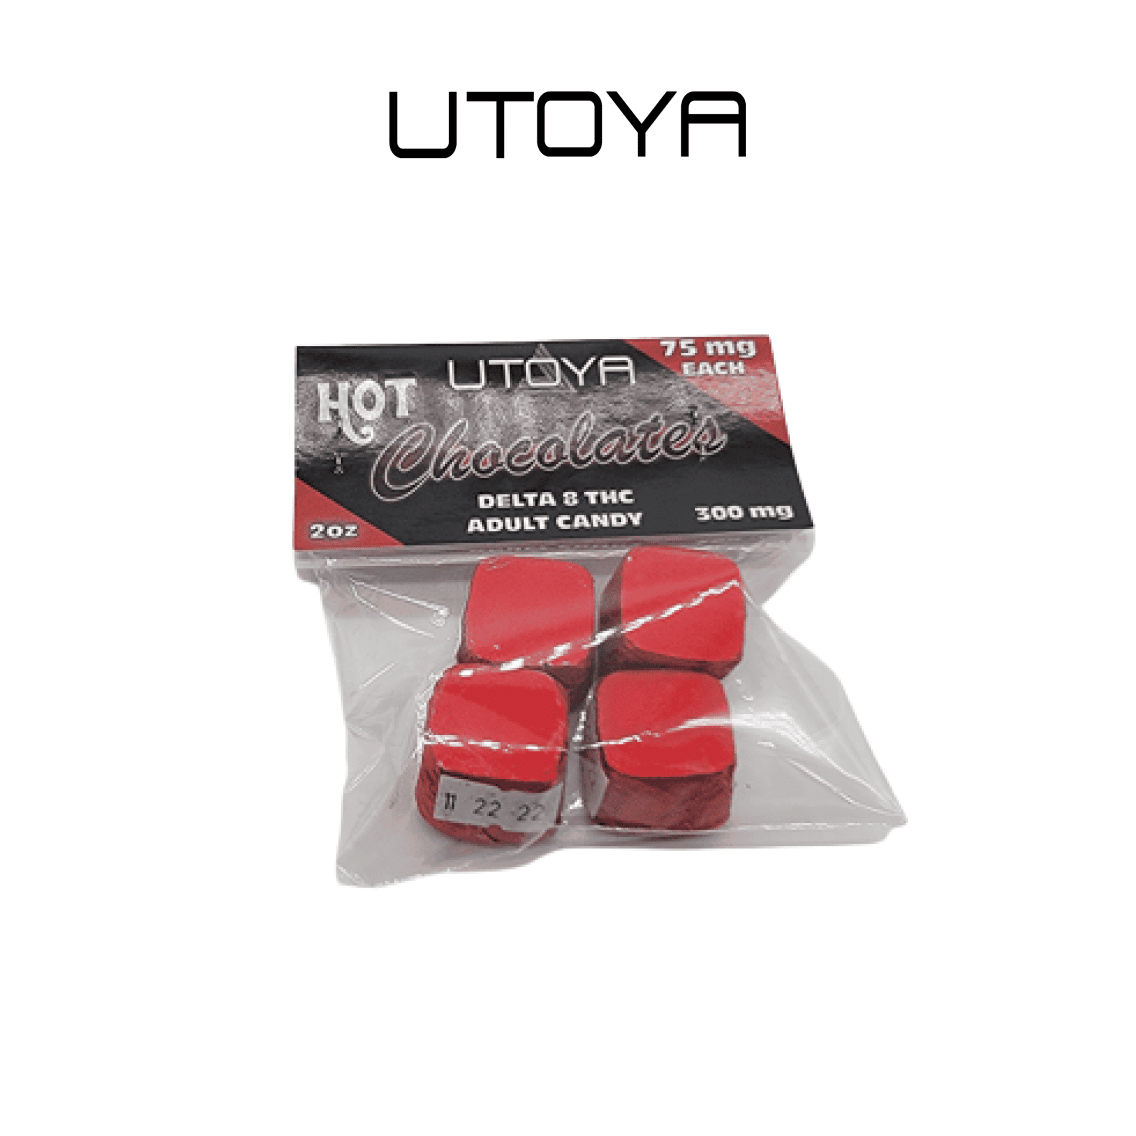 Utoya | Delta 8 THC Chocolate Squares 300mg - 3750mg Best Price